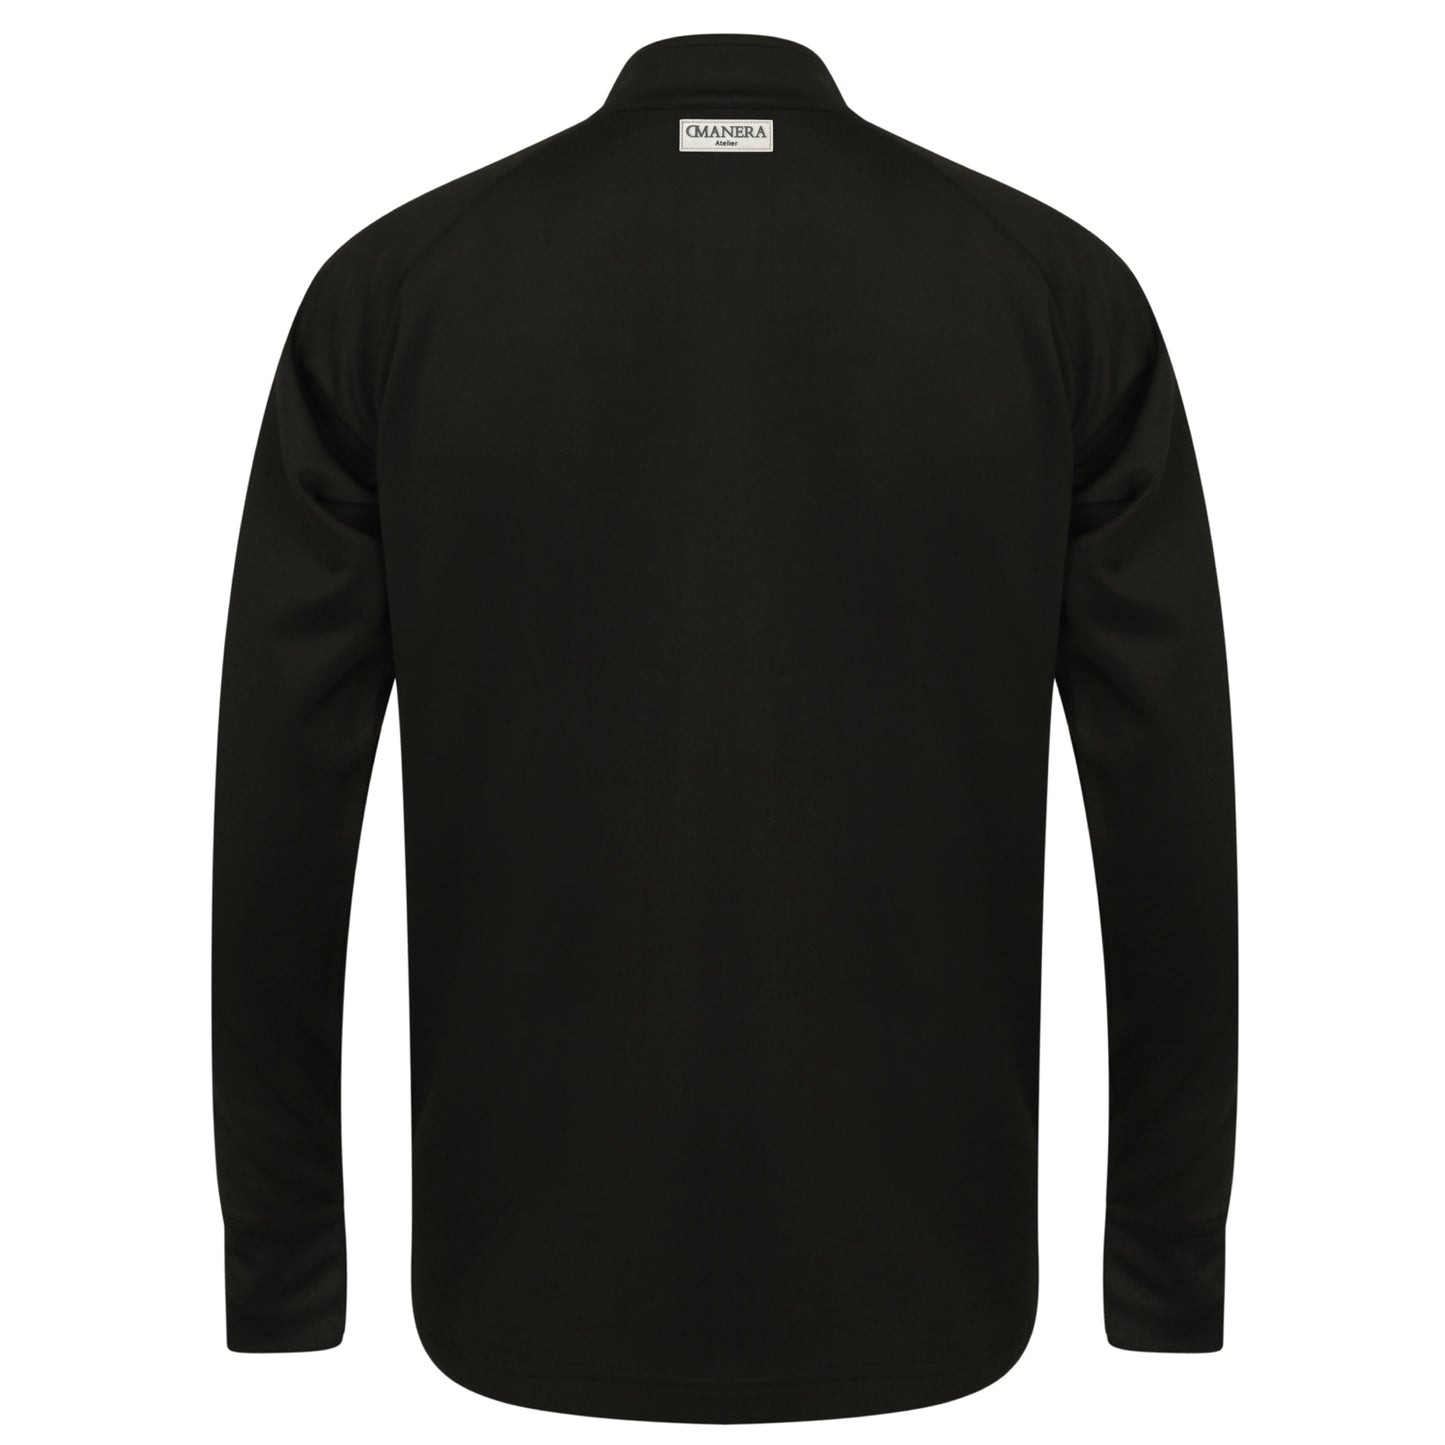 Premium Tracksuit Zip Jacket Black/Grey 250 g/m²